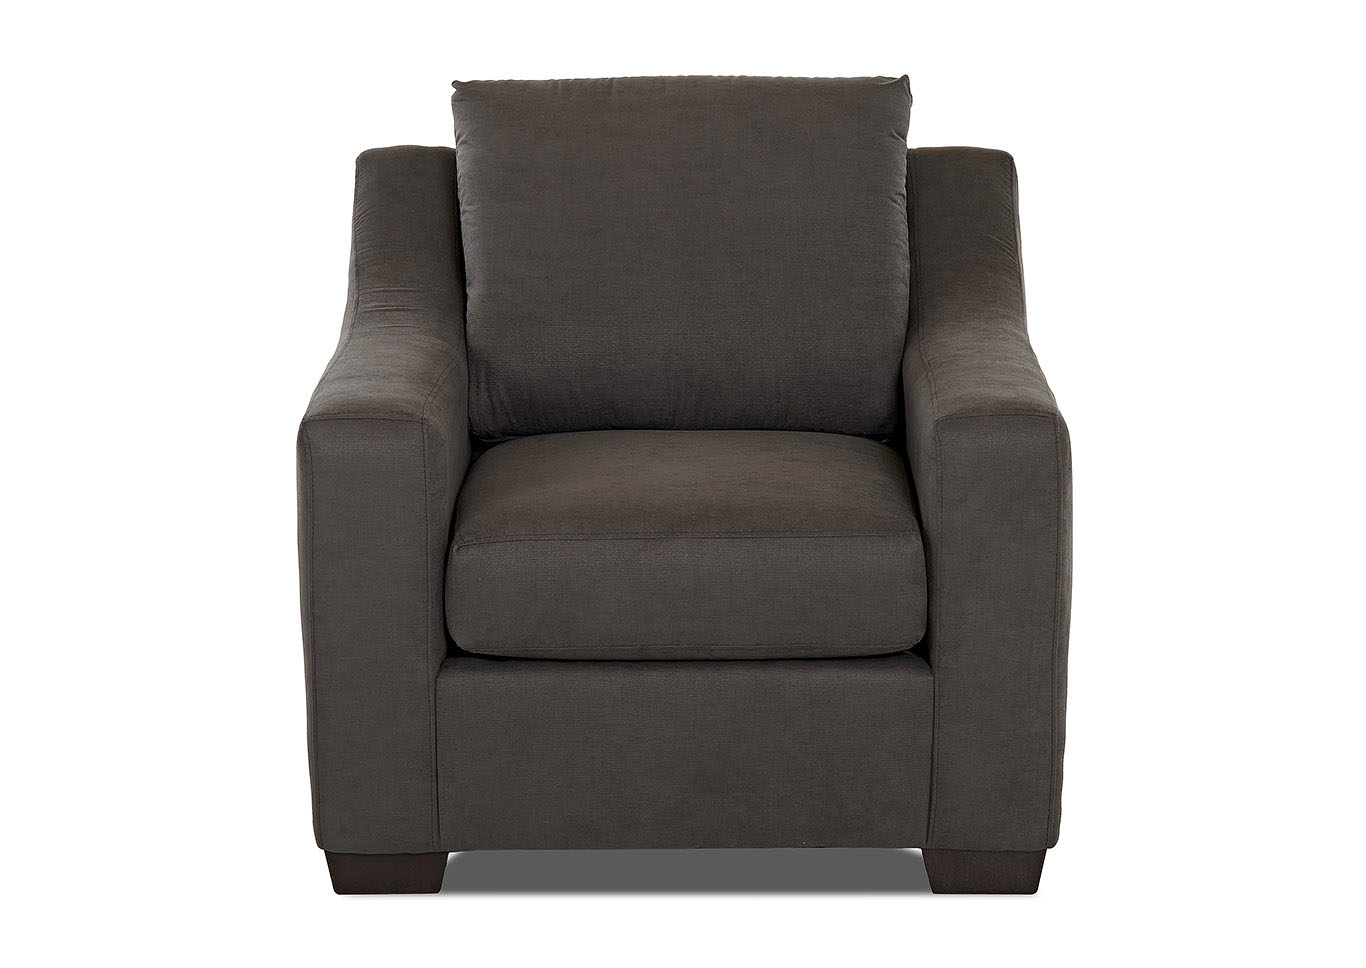 Argos Halo Gunmetal Stationary Fabric Chair,Klaussner Home Furnishings